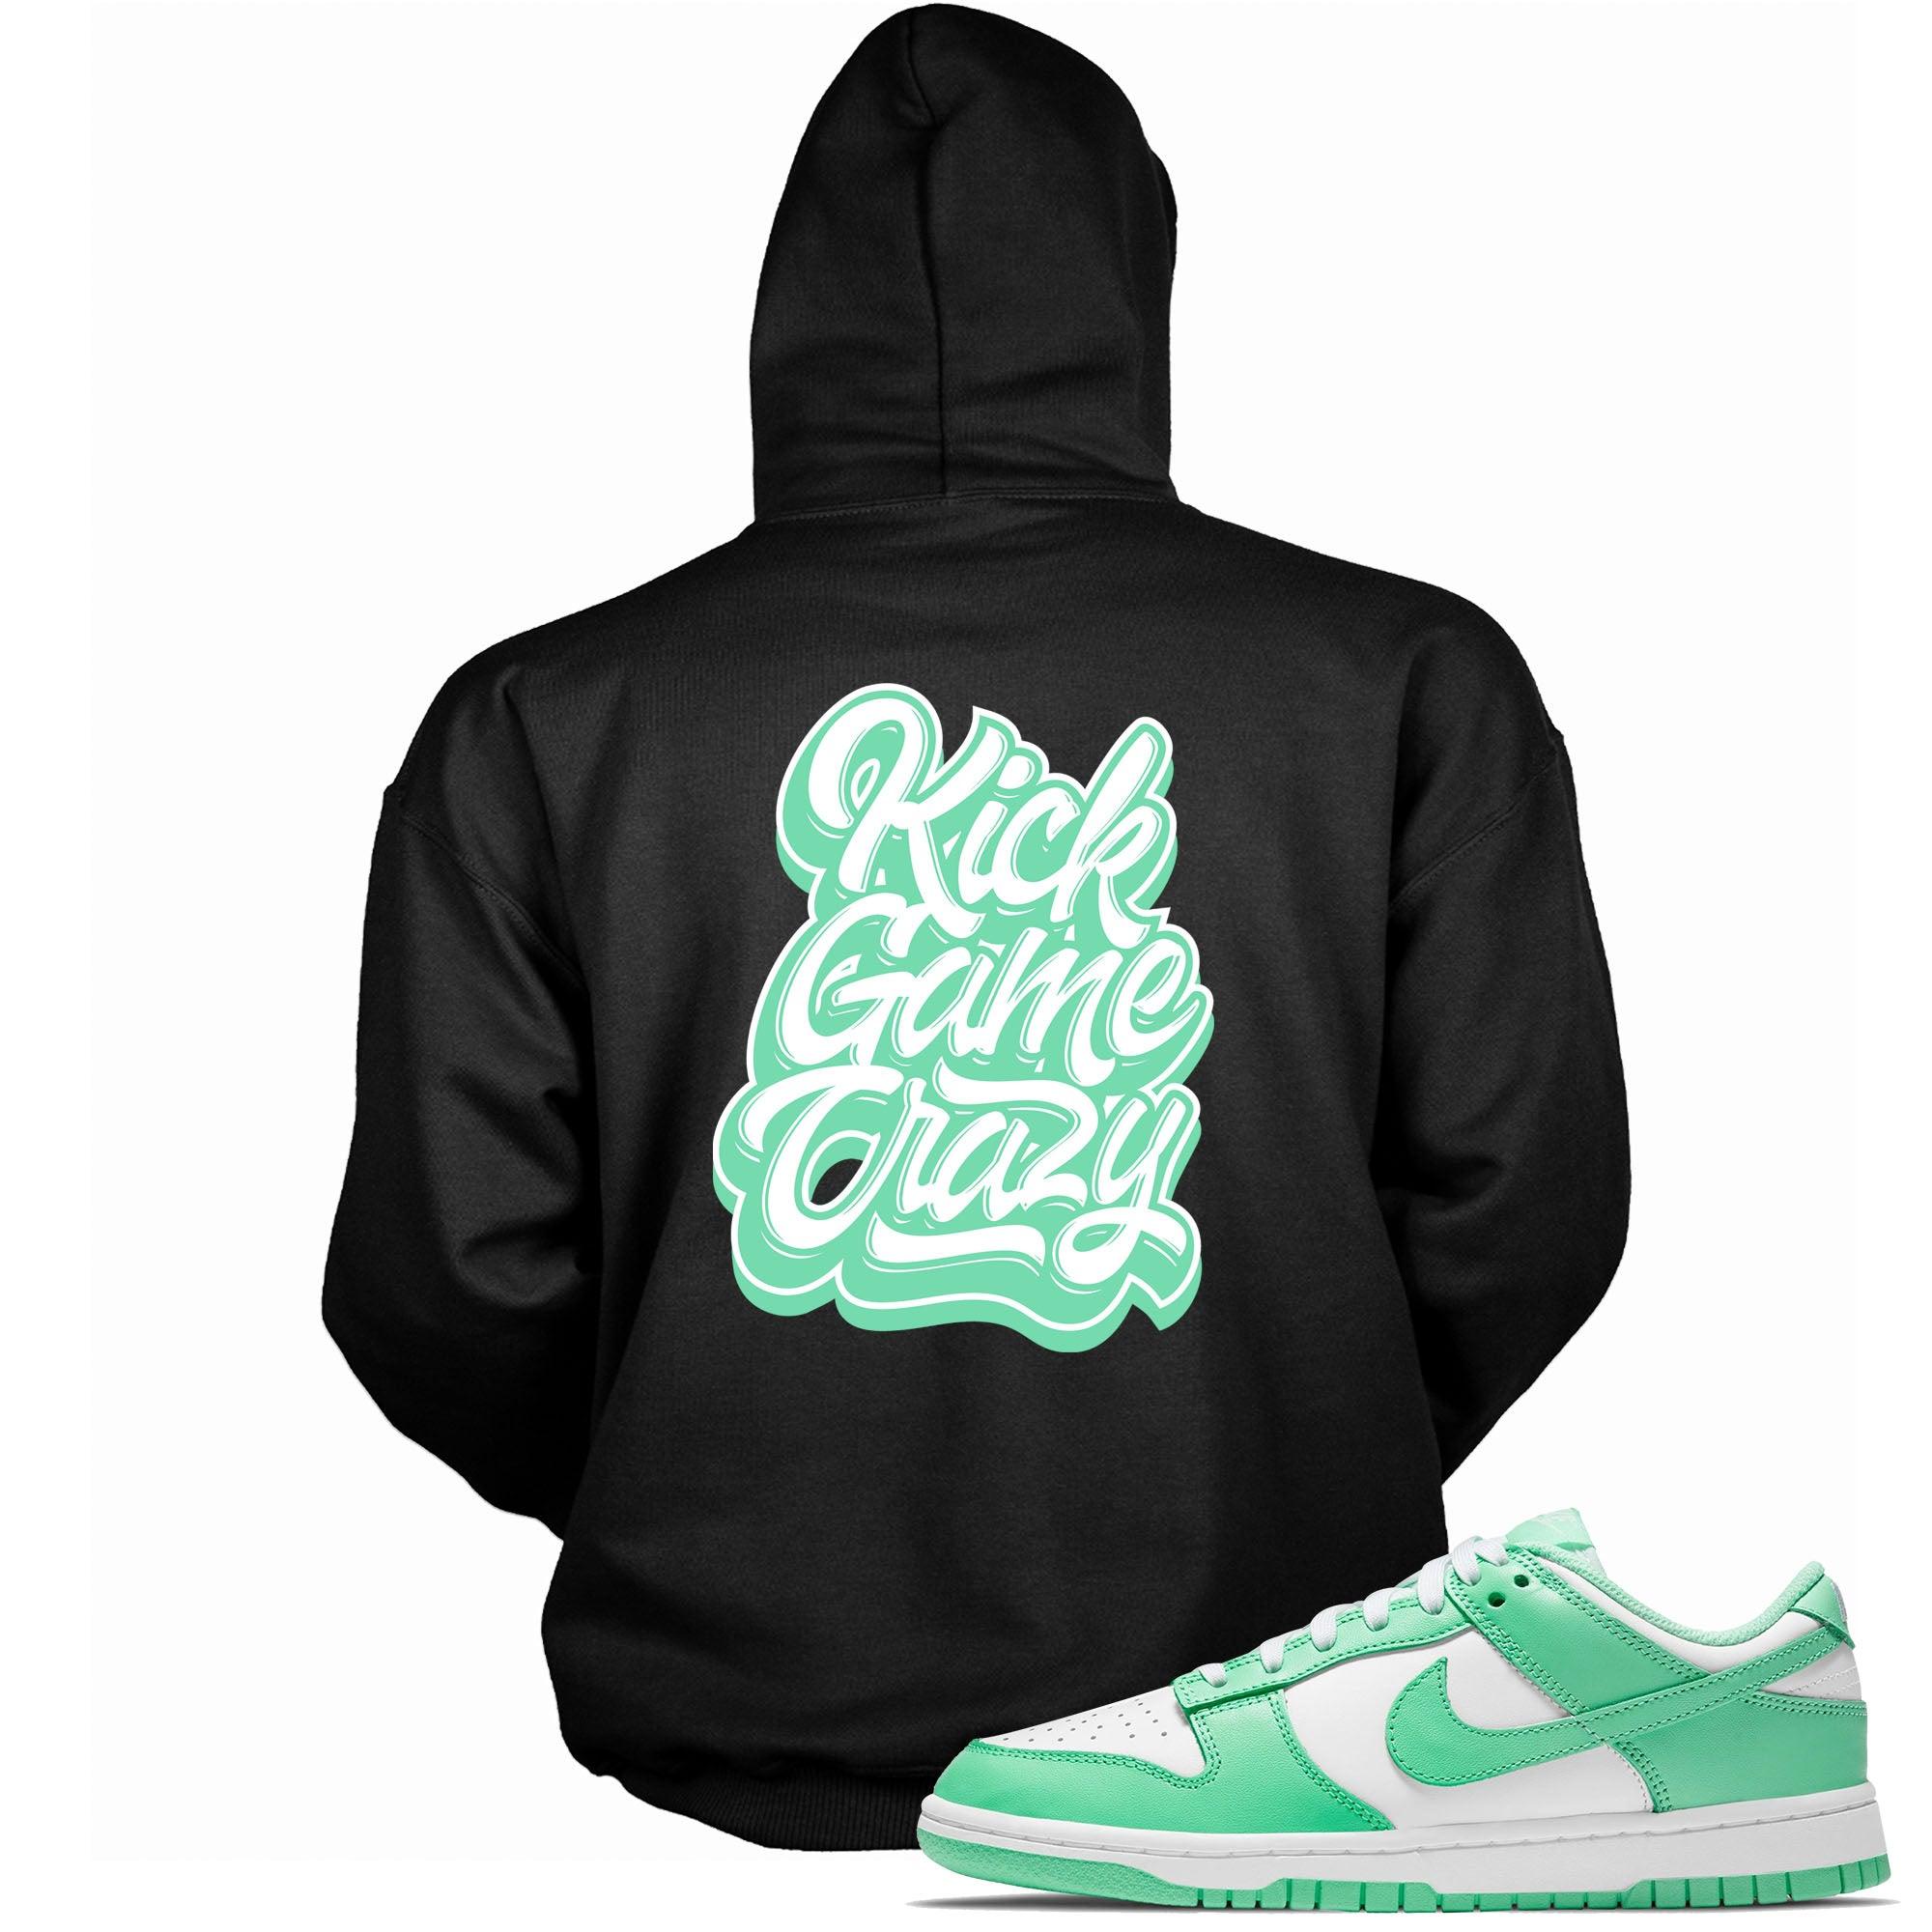 Kick Game Crazy Sneaker Sweatshirt Nike Dunk Low Green Glow photo